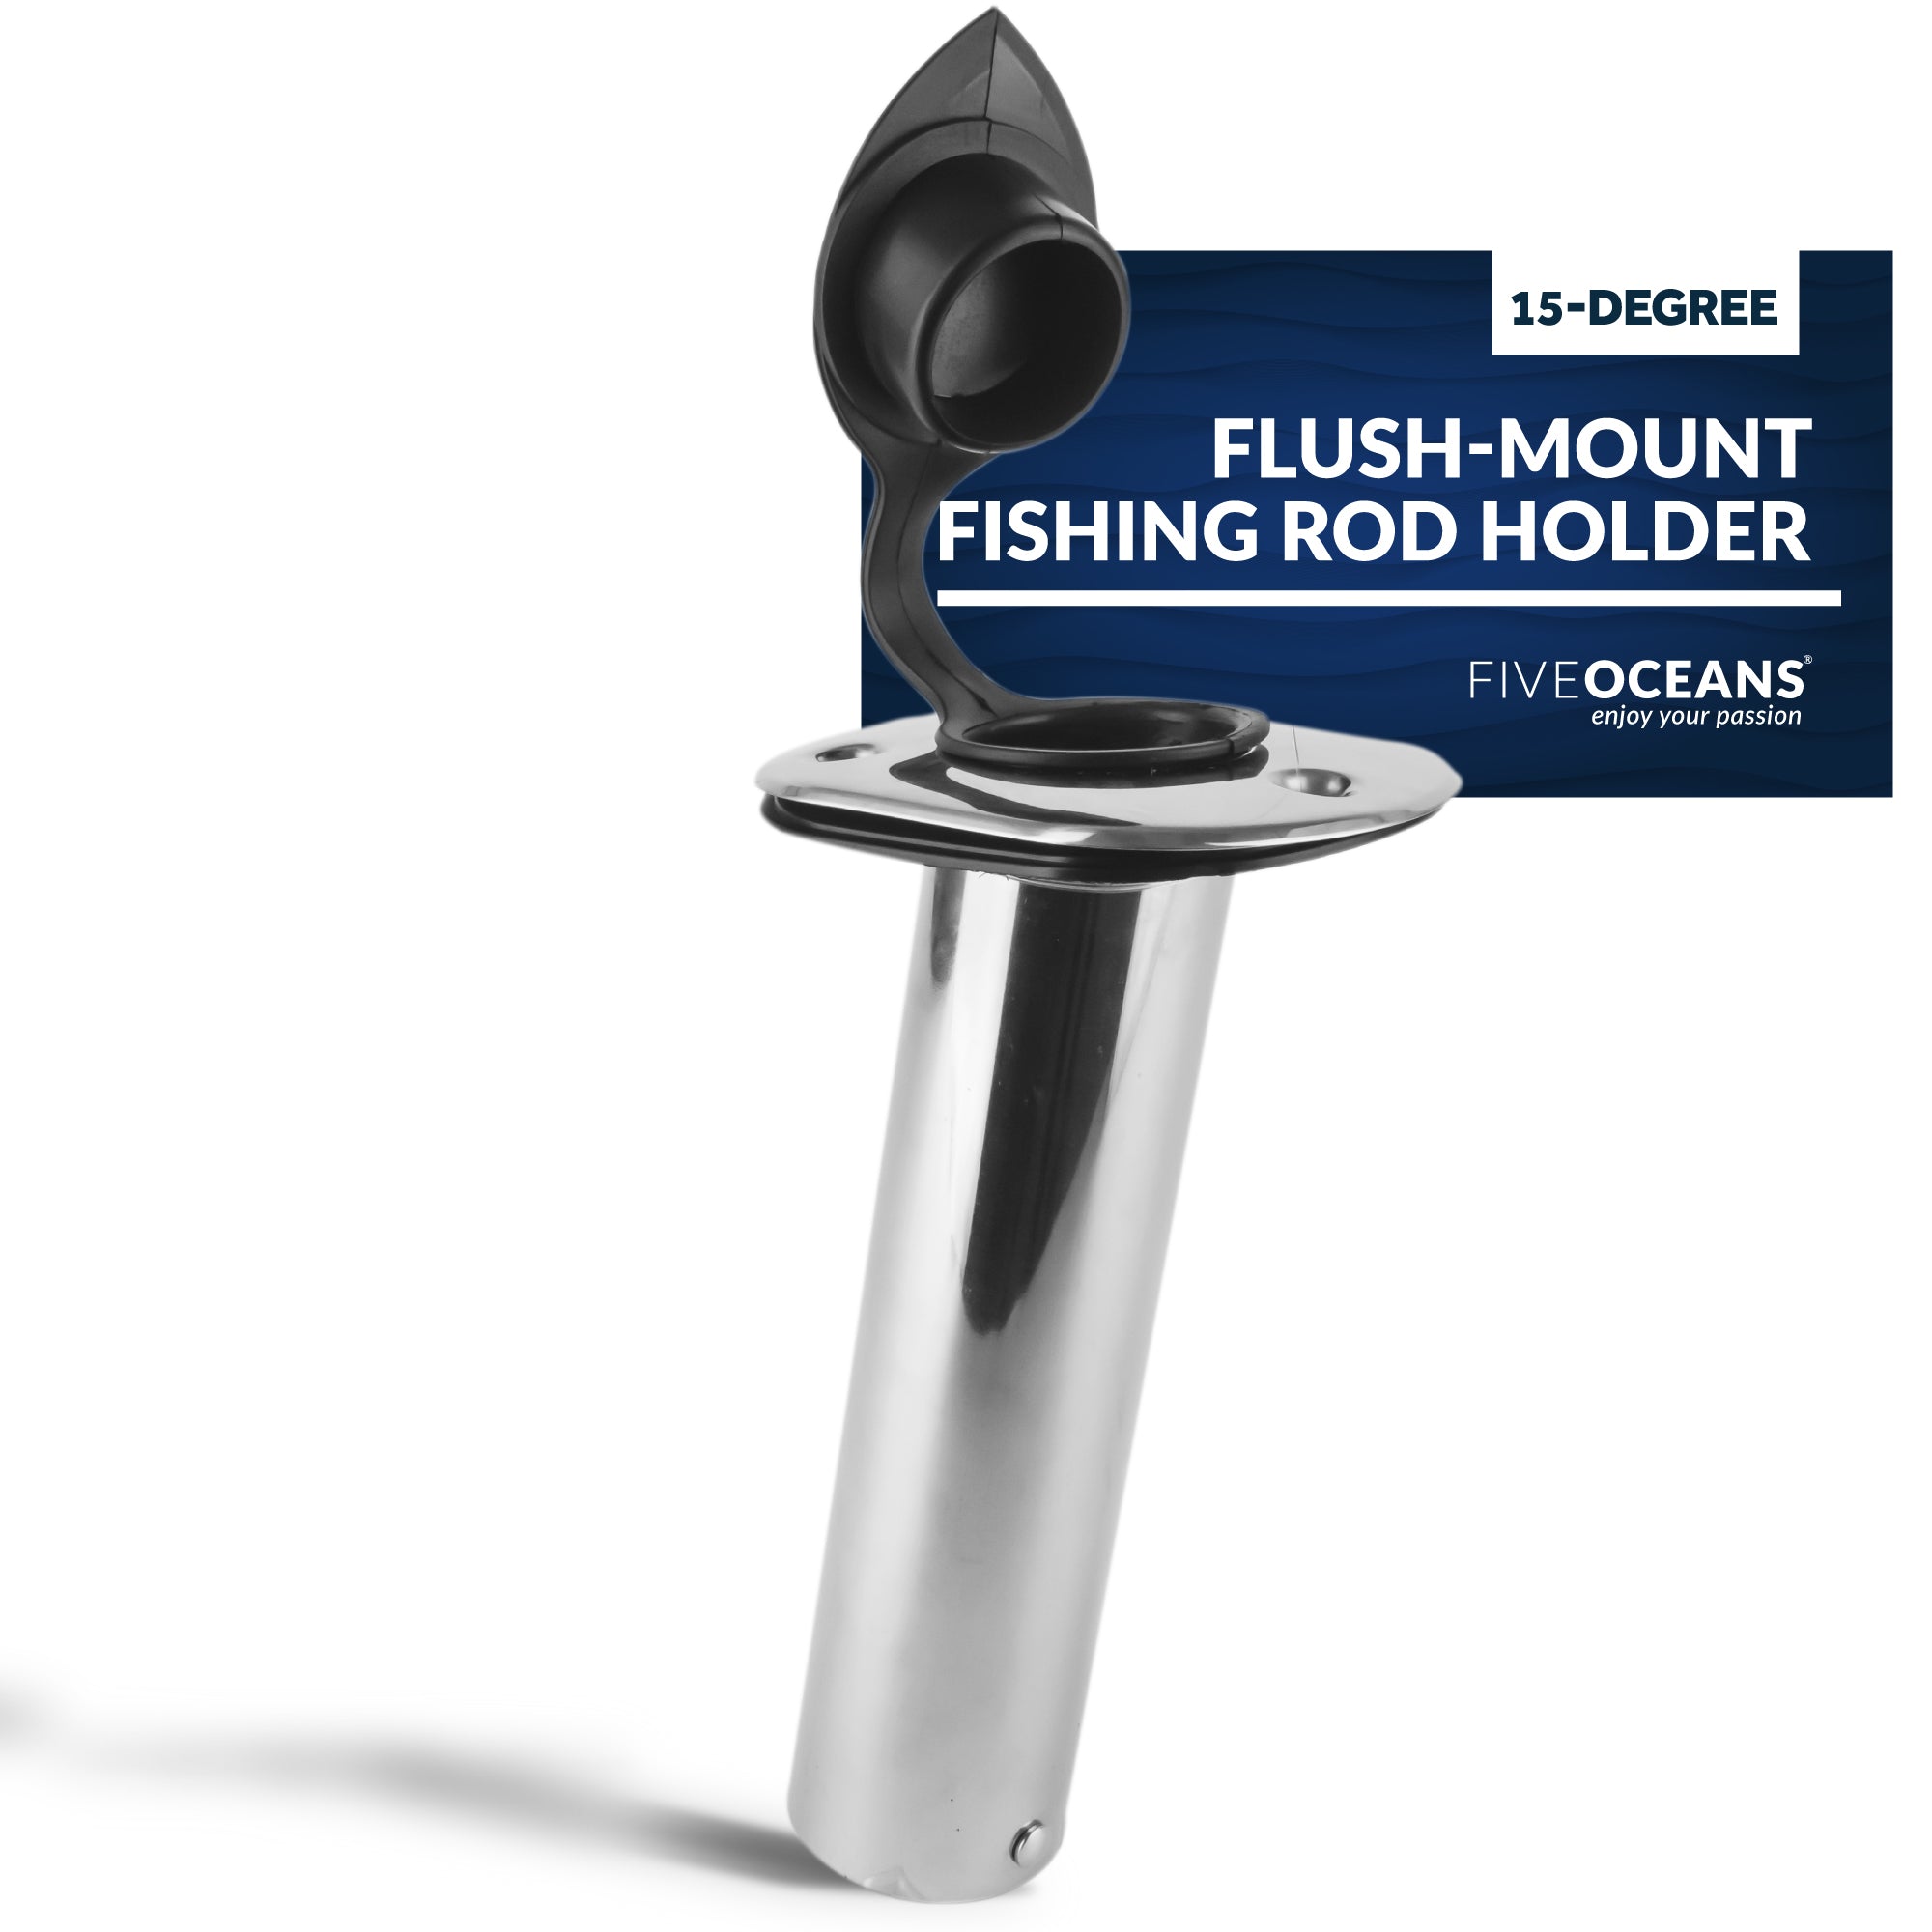 Five Oceans Flush-Mount Fishing Rod Holder 15-Degree Top Flange w/ Flip-Up Cap, Open Base End Stainless Steel Fo-4496